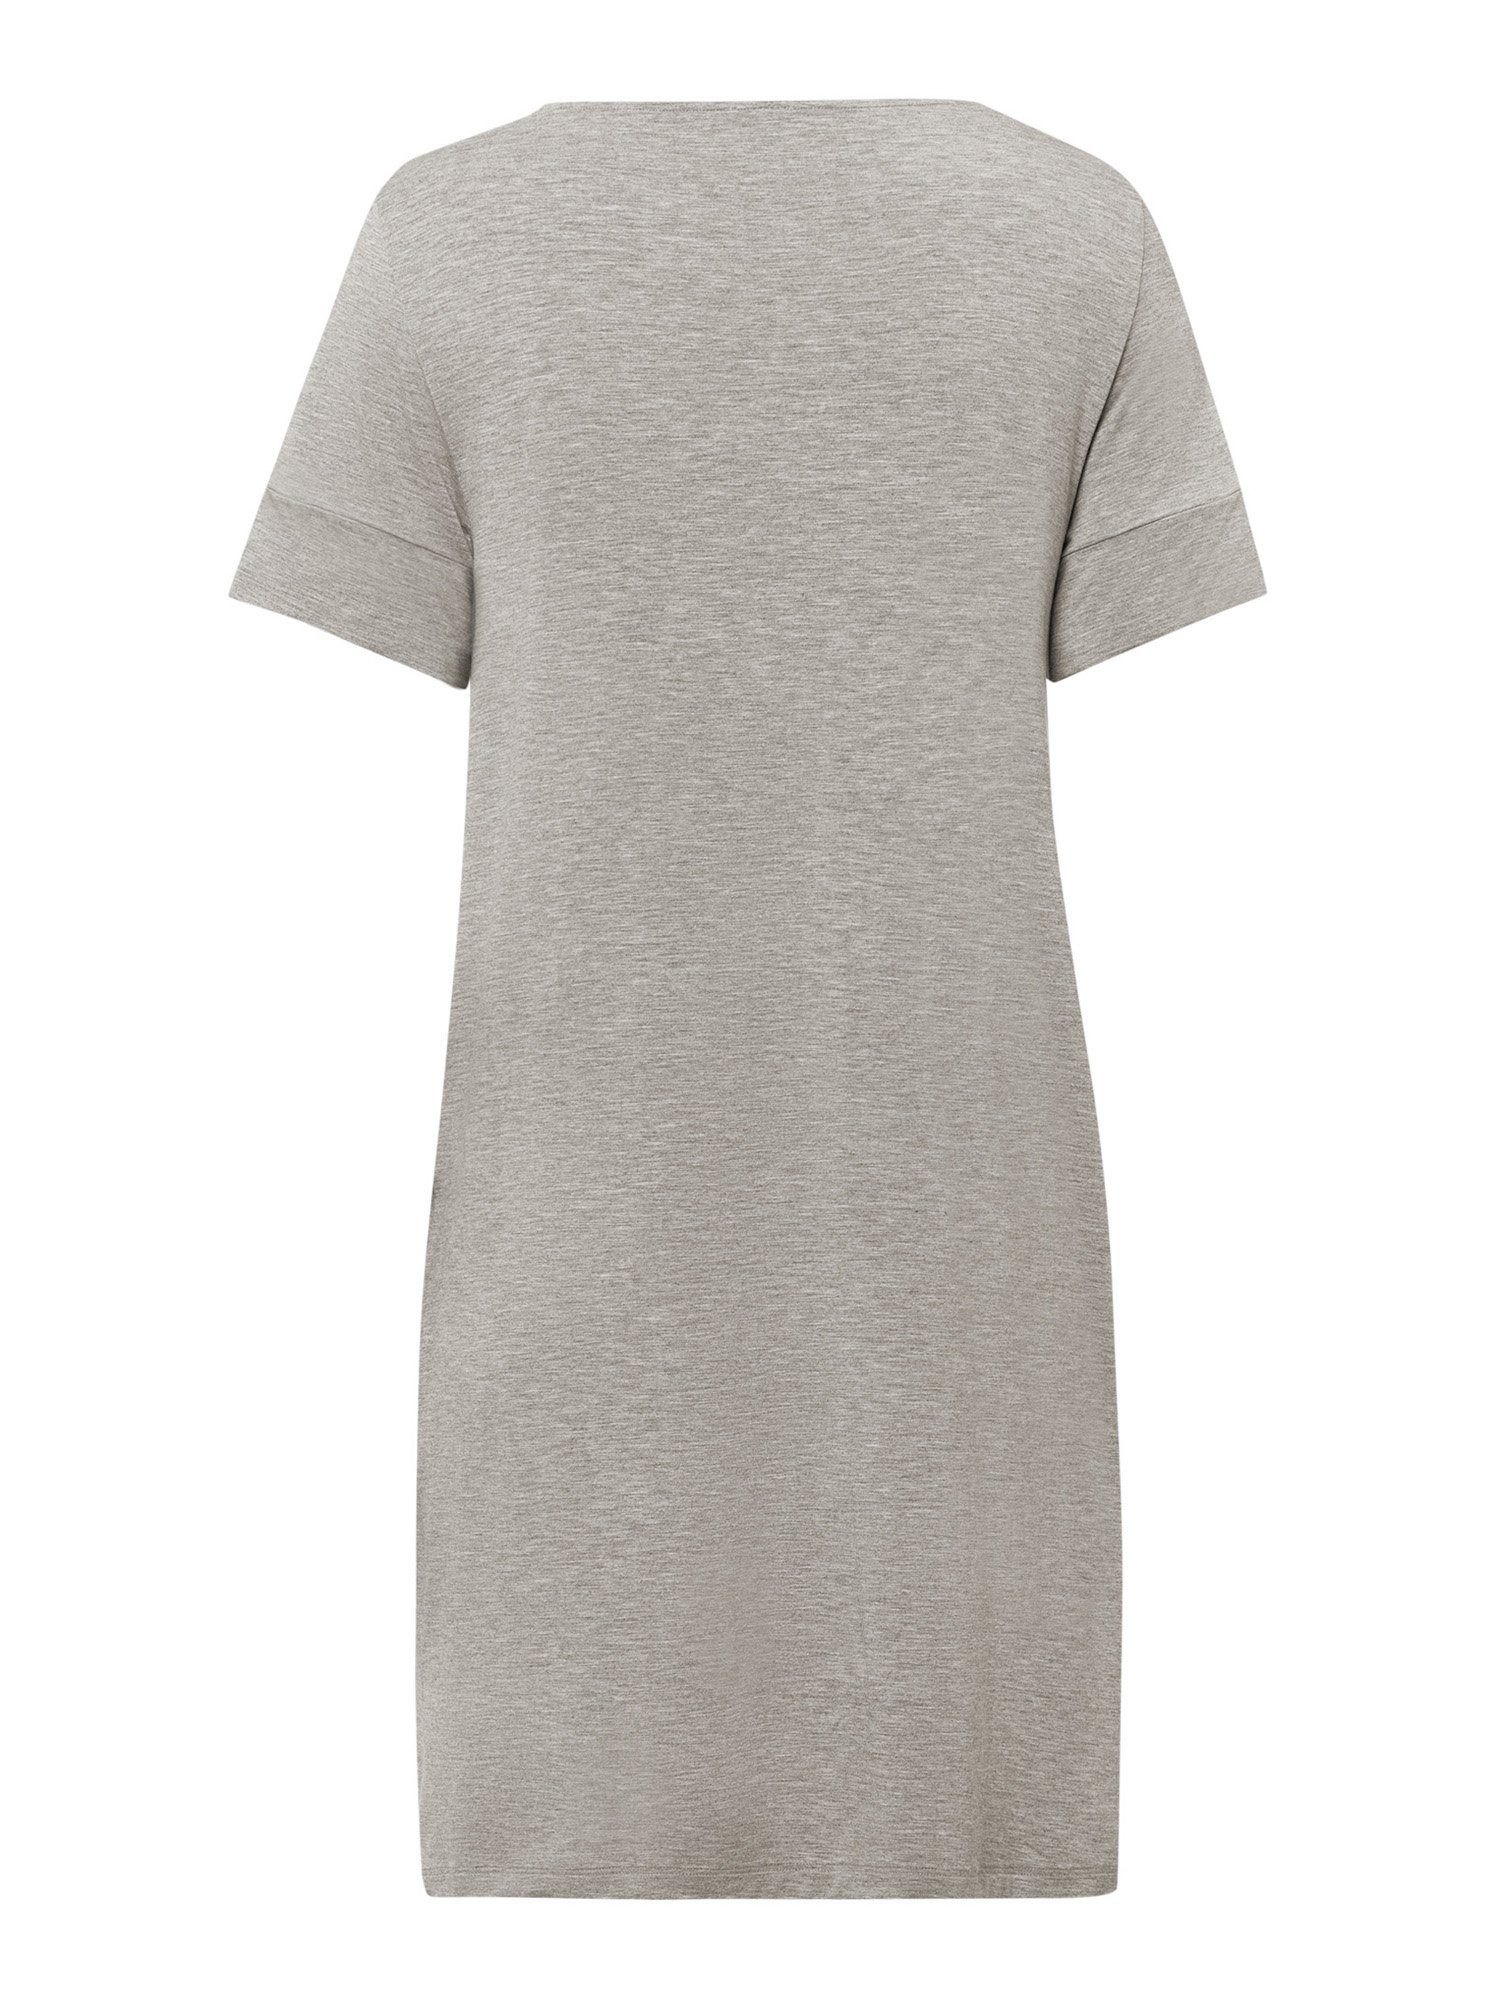 Hanro Nachthemd Natural Elegance Nacht-hemd sleepwear grey schlafmode melange